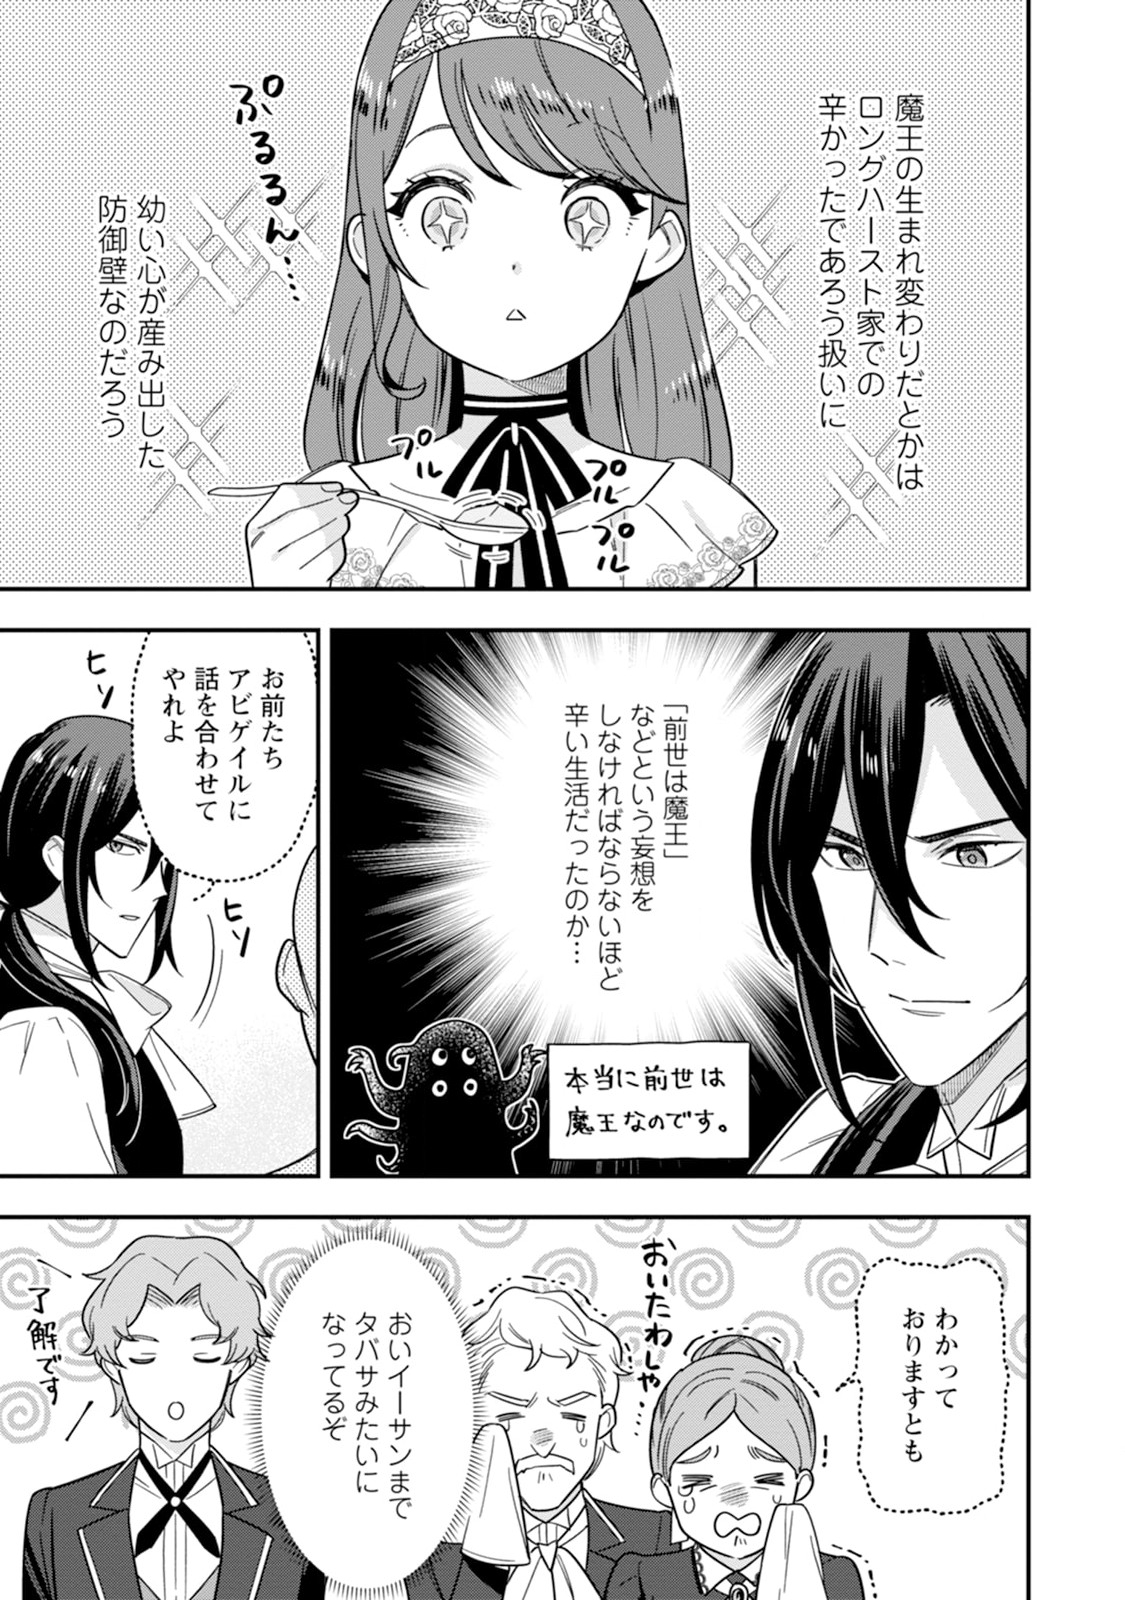 Aisanai to Iwaremashite mo - Chapter 2 - Page 9